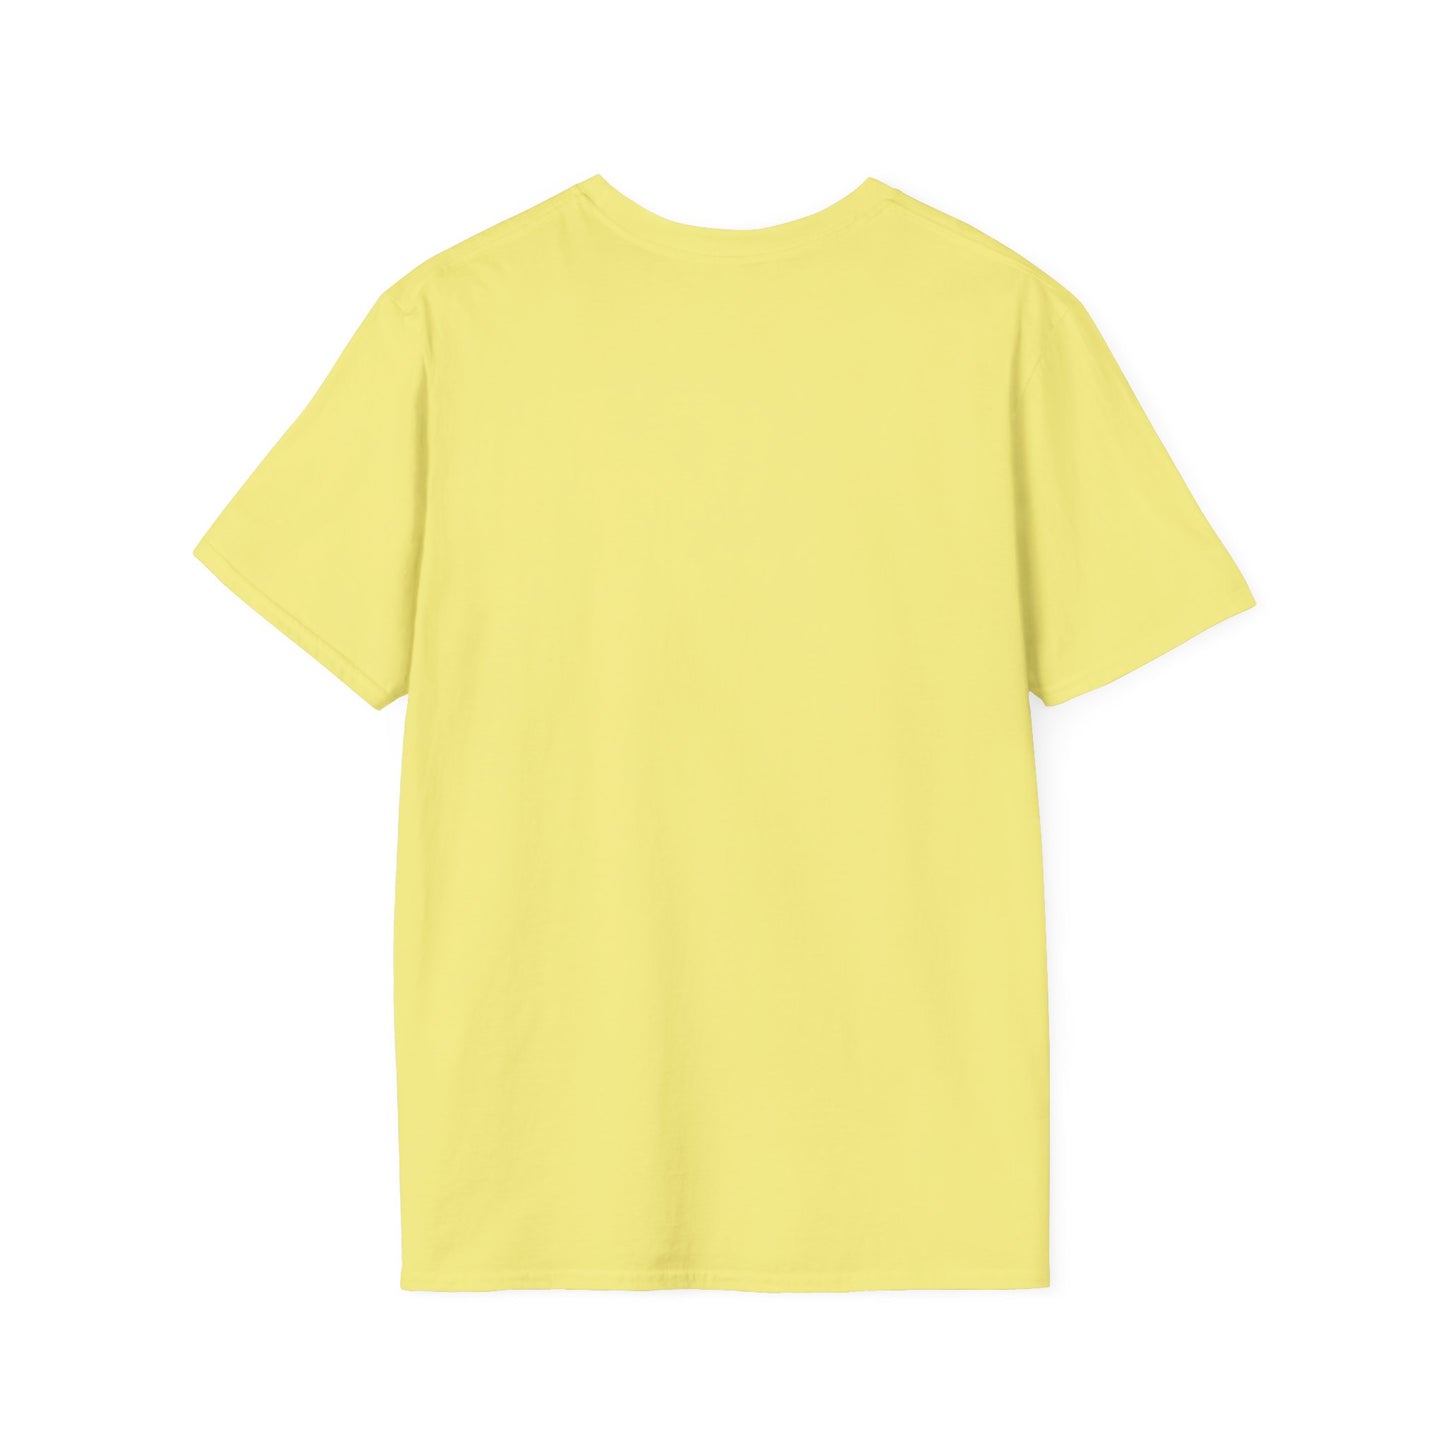 Knotty Girl Unisex Softstyle T-Shirt